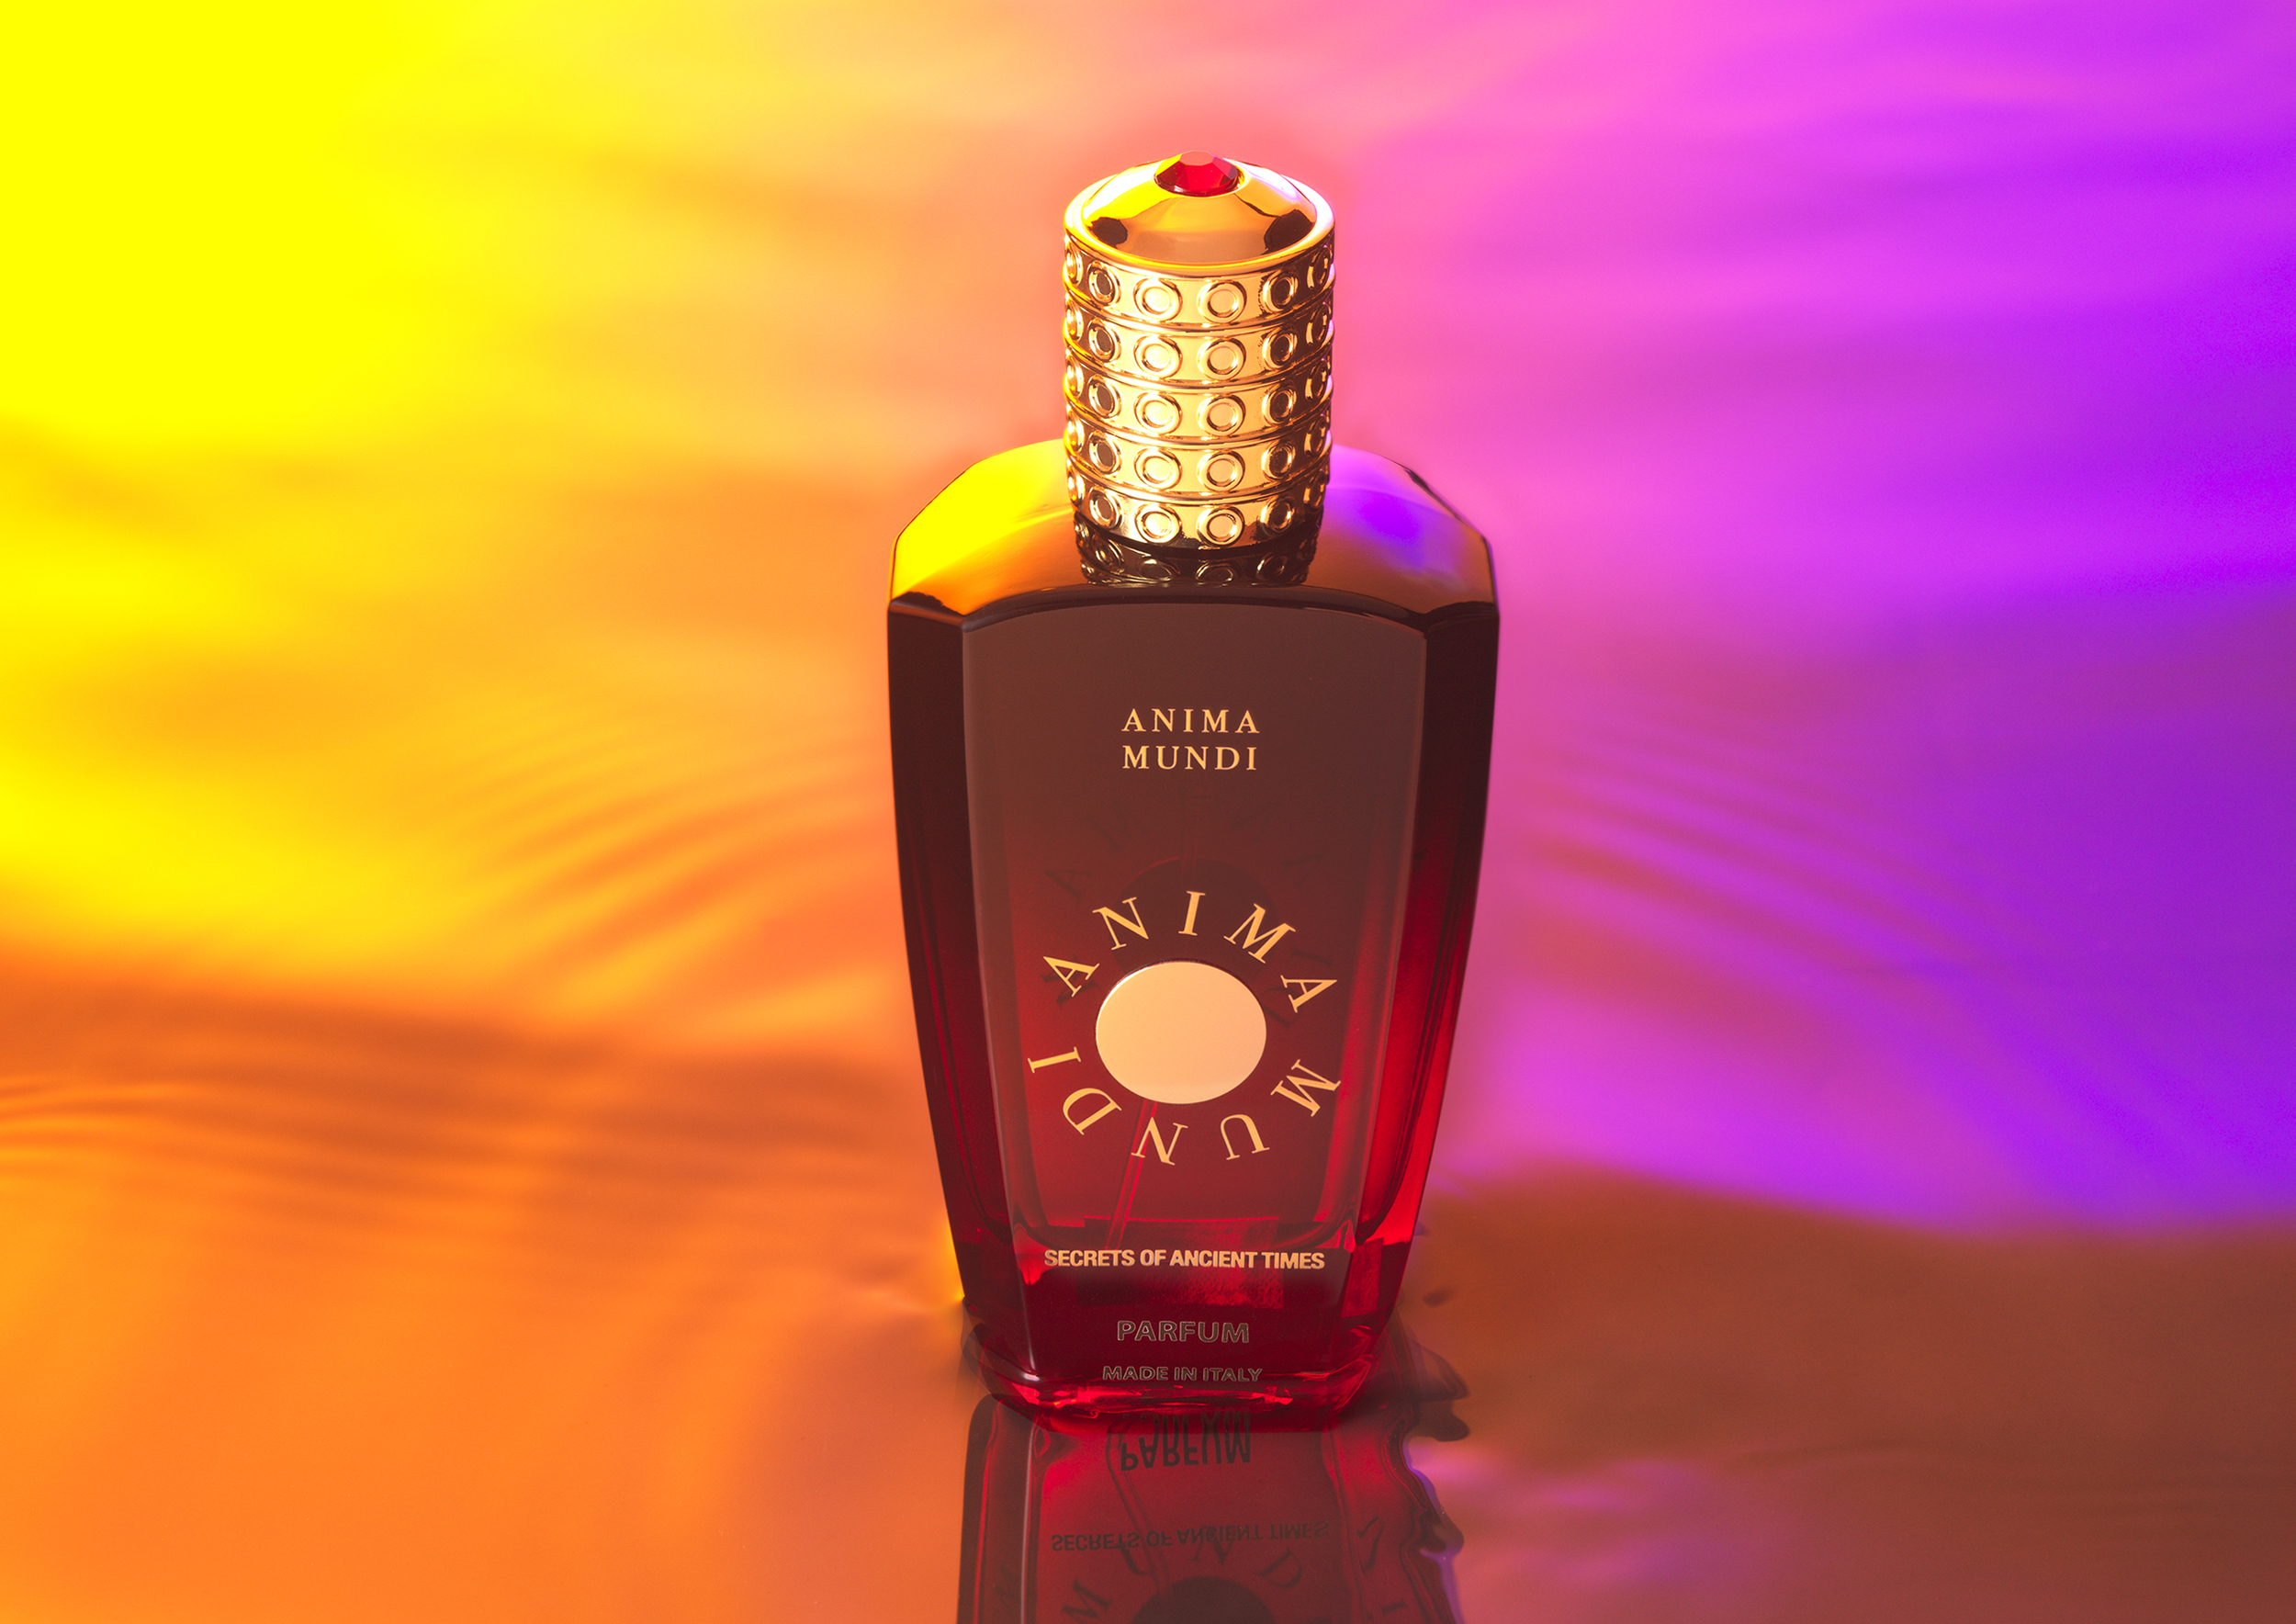 https://crisp.cc/wp-content/uploads/2019/09/Anima-Mundi-parfum.jpg